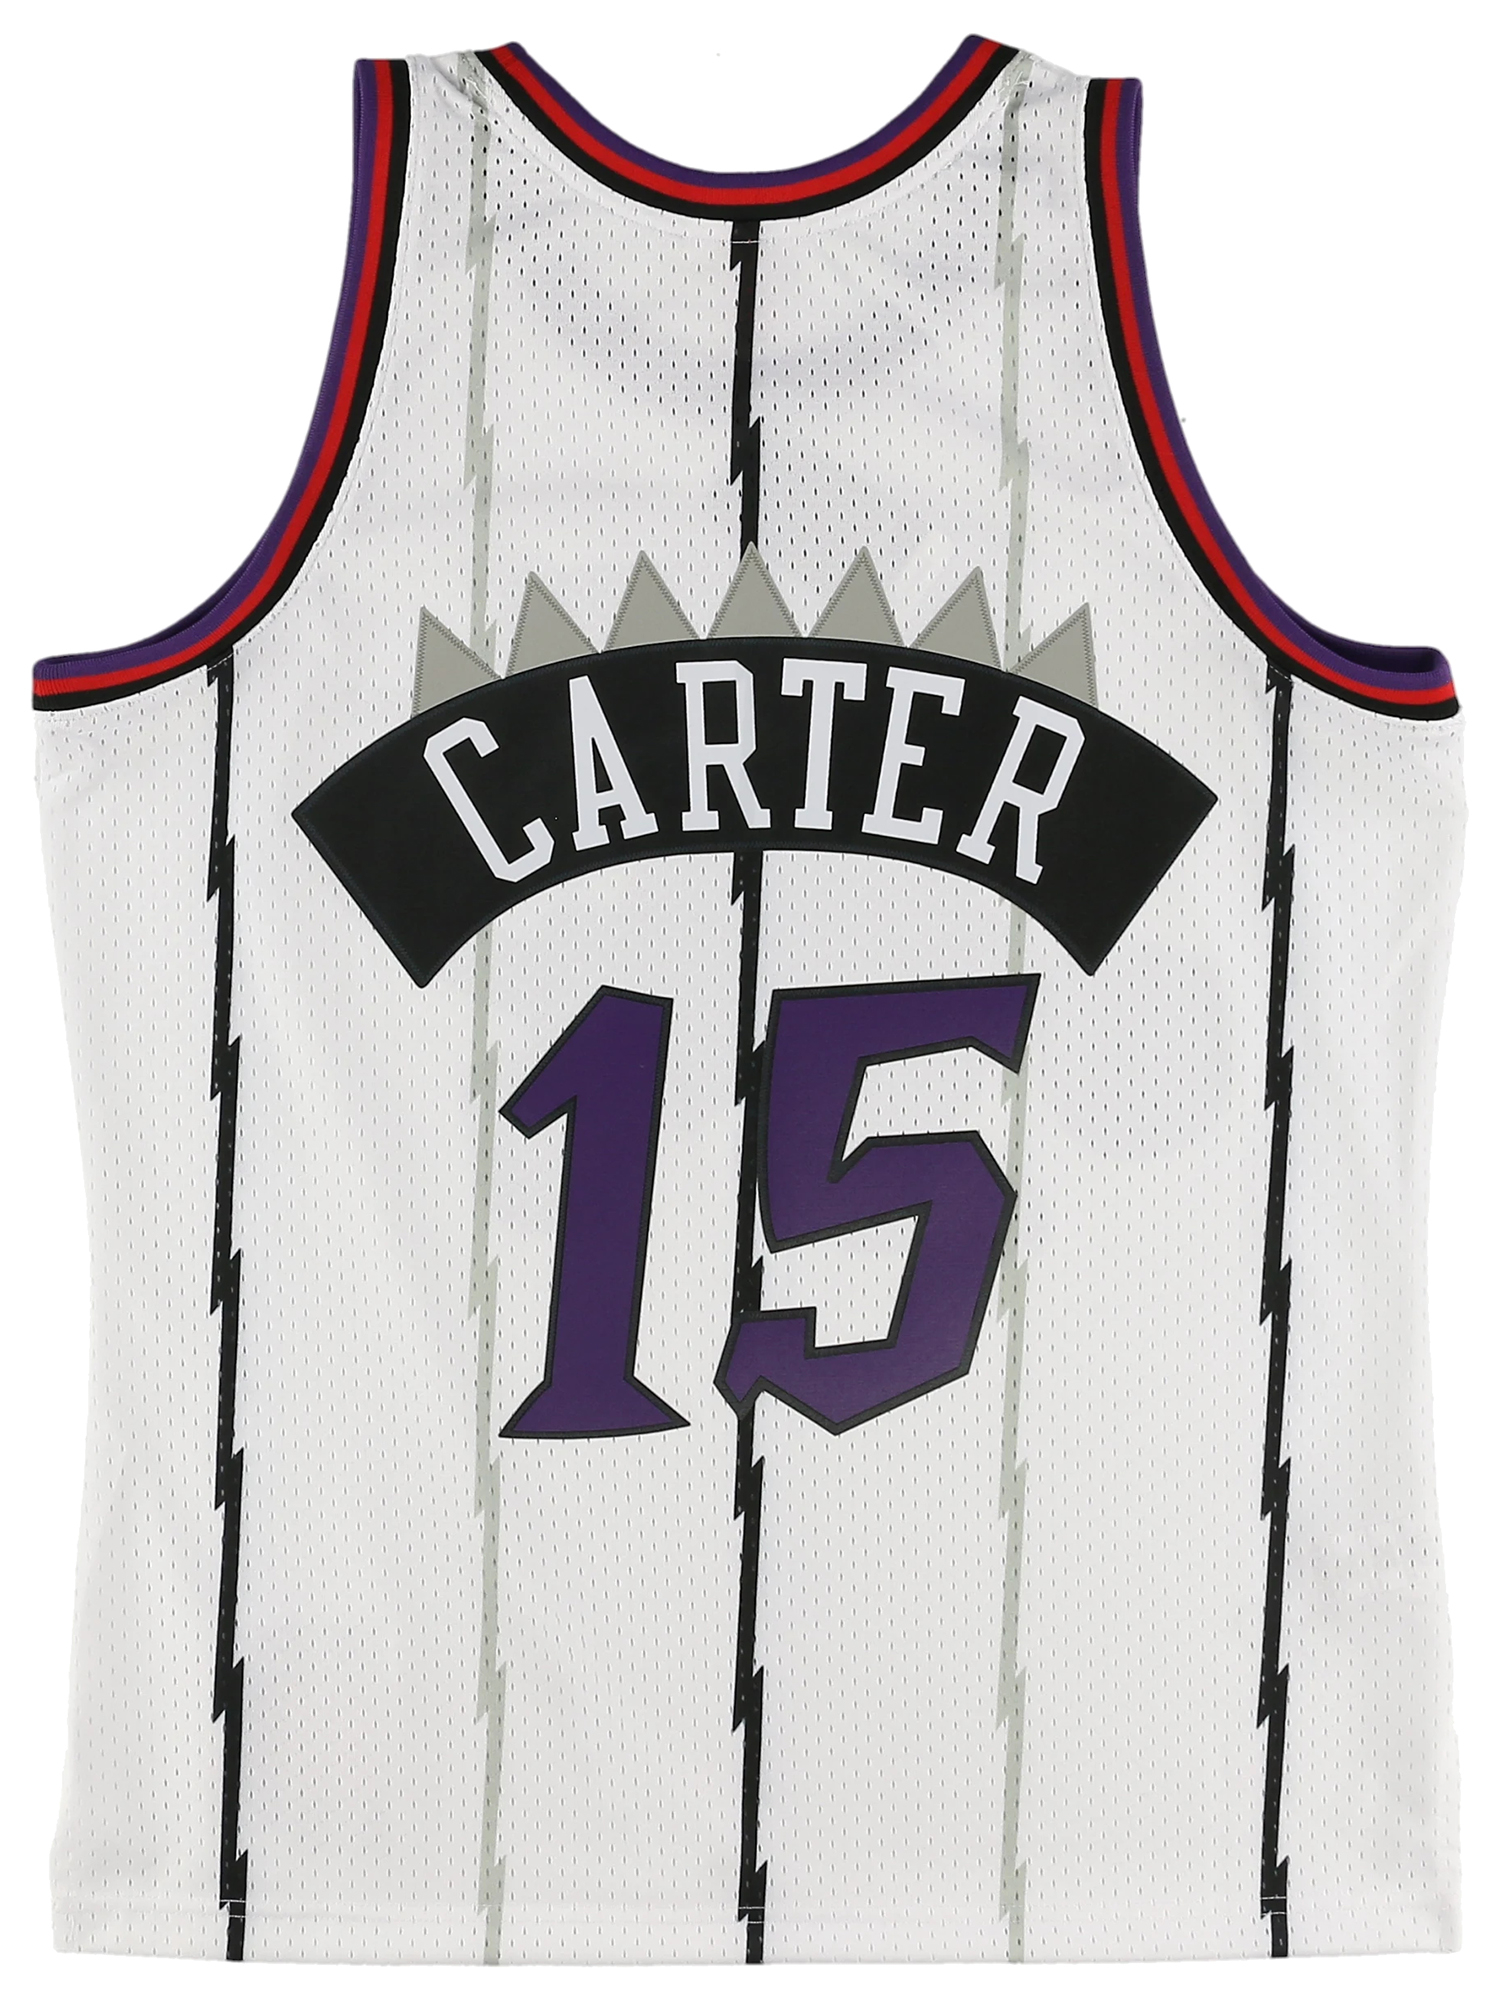 NBA CARTER #15 ビンス・カーター トロントラプターズ ユニフォーム - www.qweb.qa